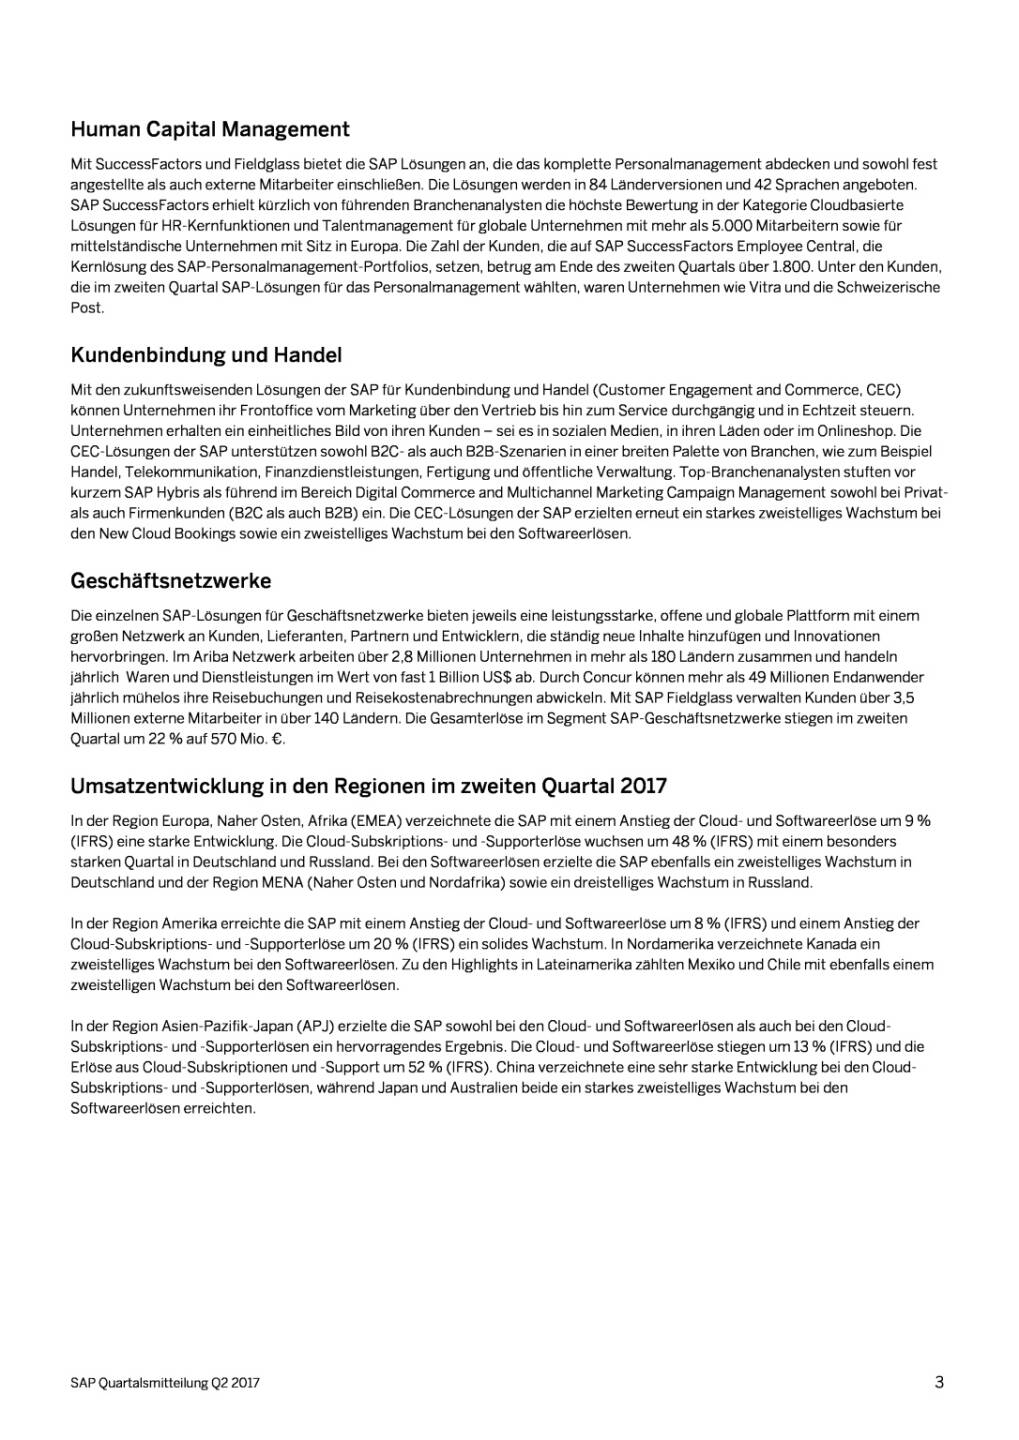 SAP mit Q2, Seite 3/27, komplettes Dokument unter http://boerse-social.com/static/uploads/file_2290_sap_mit_q2.pdf